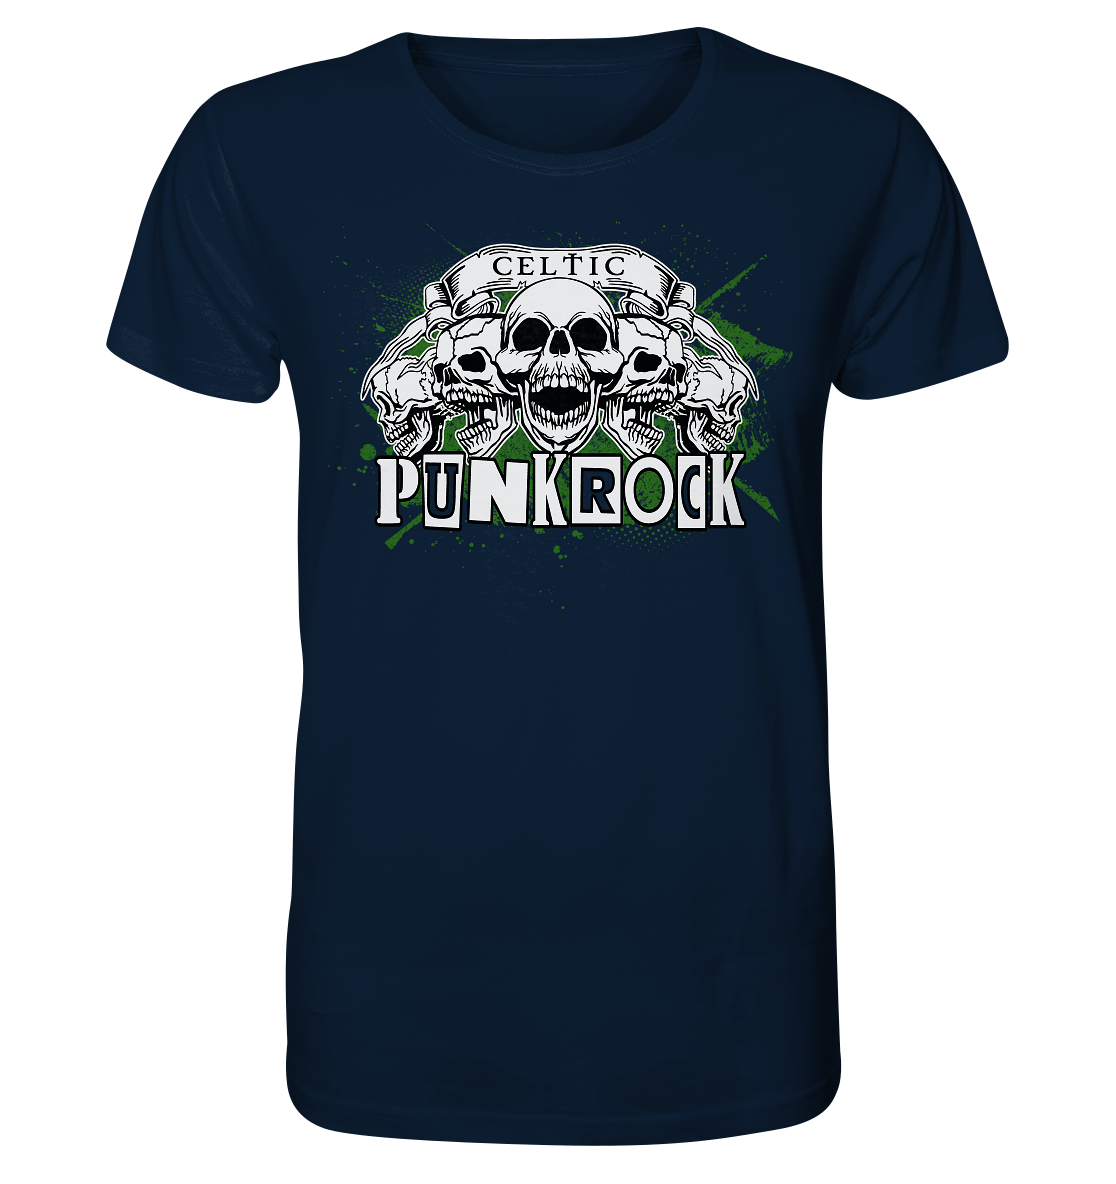 Celtic "Punkrock" - Organic Shirt